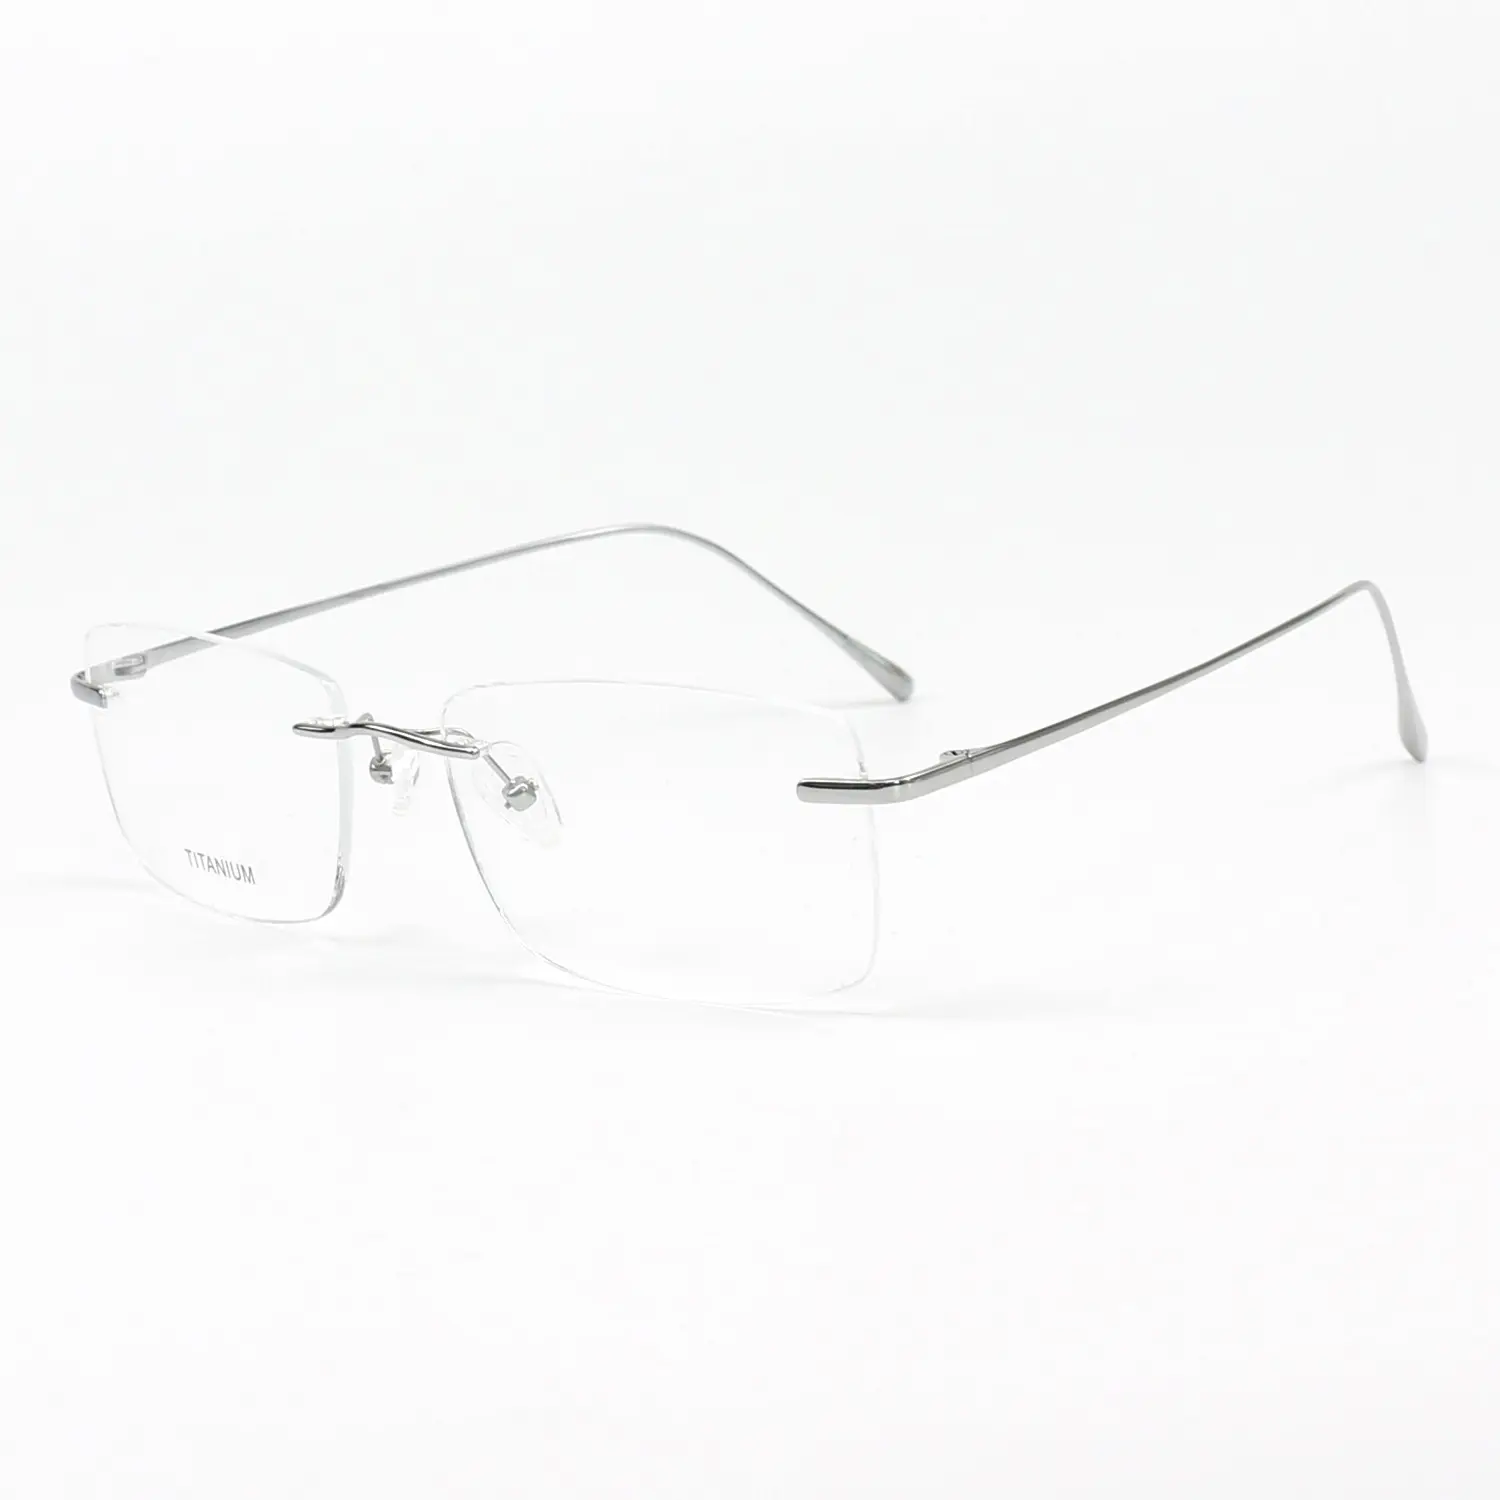 Hoge Kwaliteit Puur Titanium Brillen Optische Bril Frame Nieuwe Mode Randloze Brillen Brillen Monturen Voor Mannen